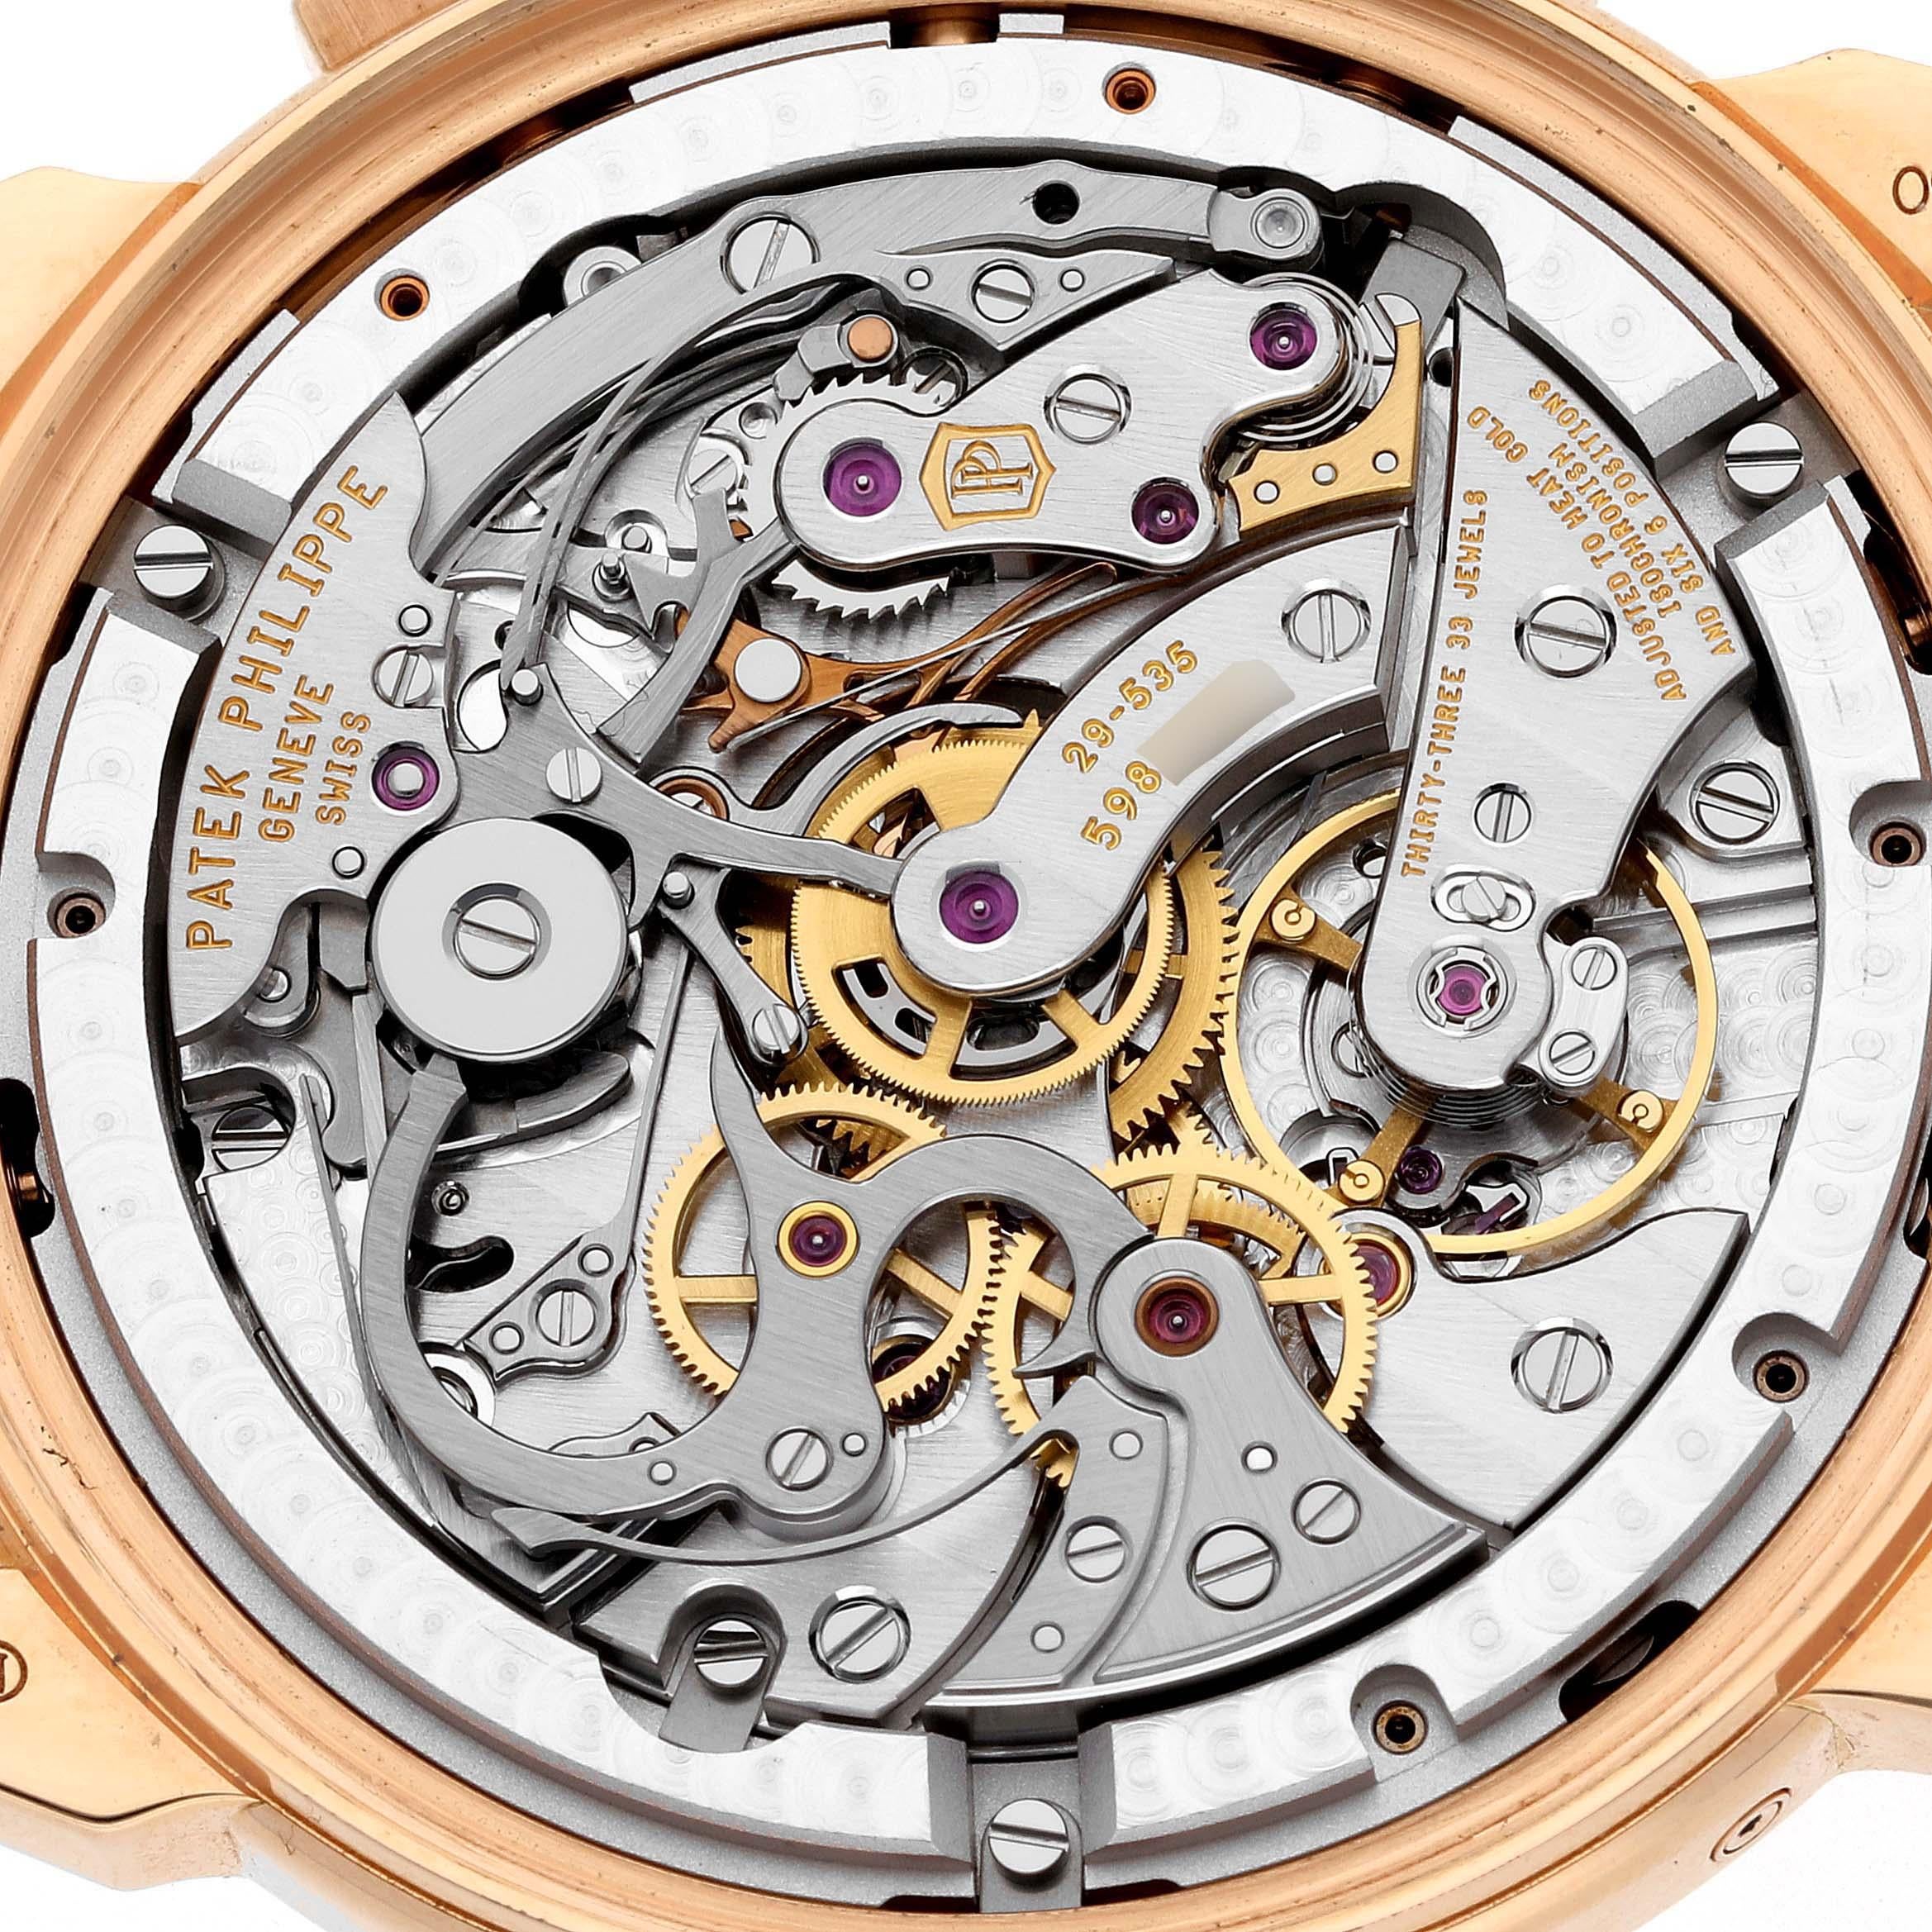 Patek Philippe Grand Complications Perpetual Calendar Rose Gold Watch 5270 For Sale 5